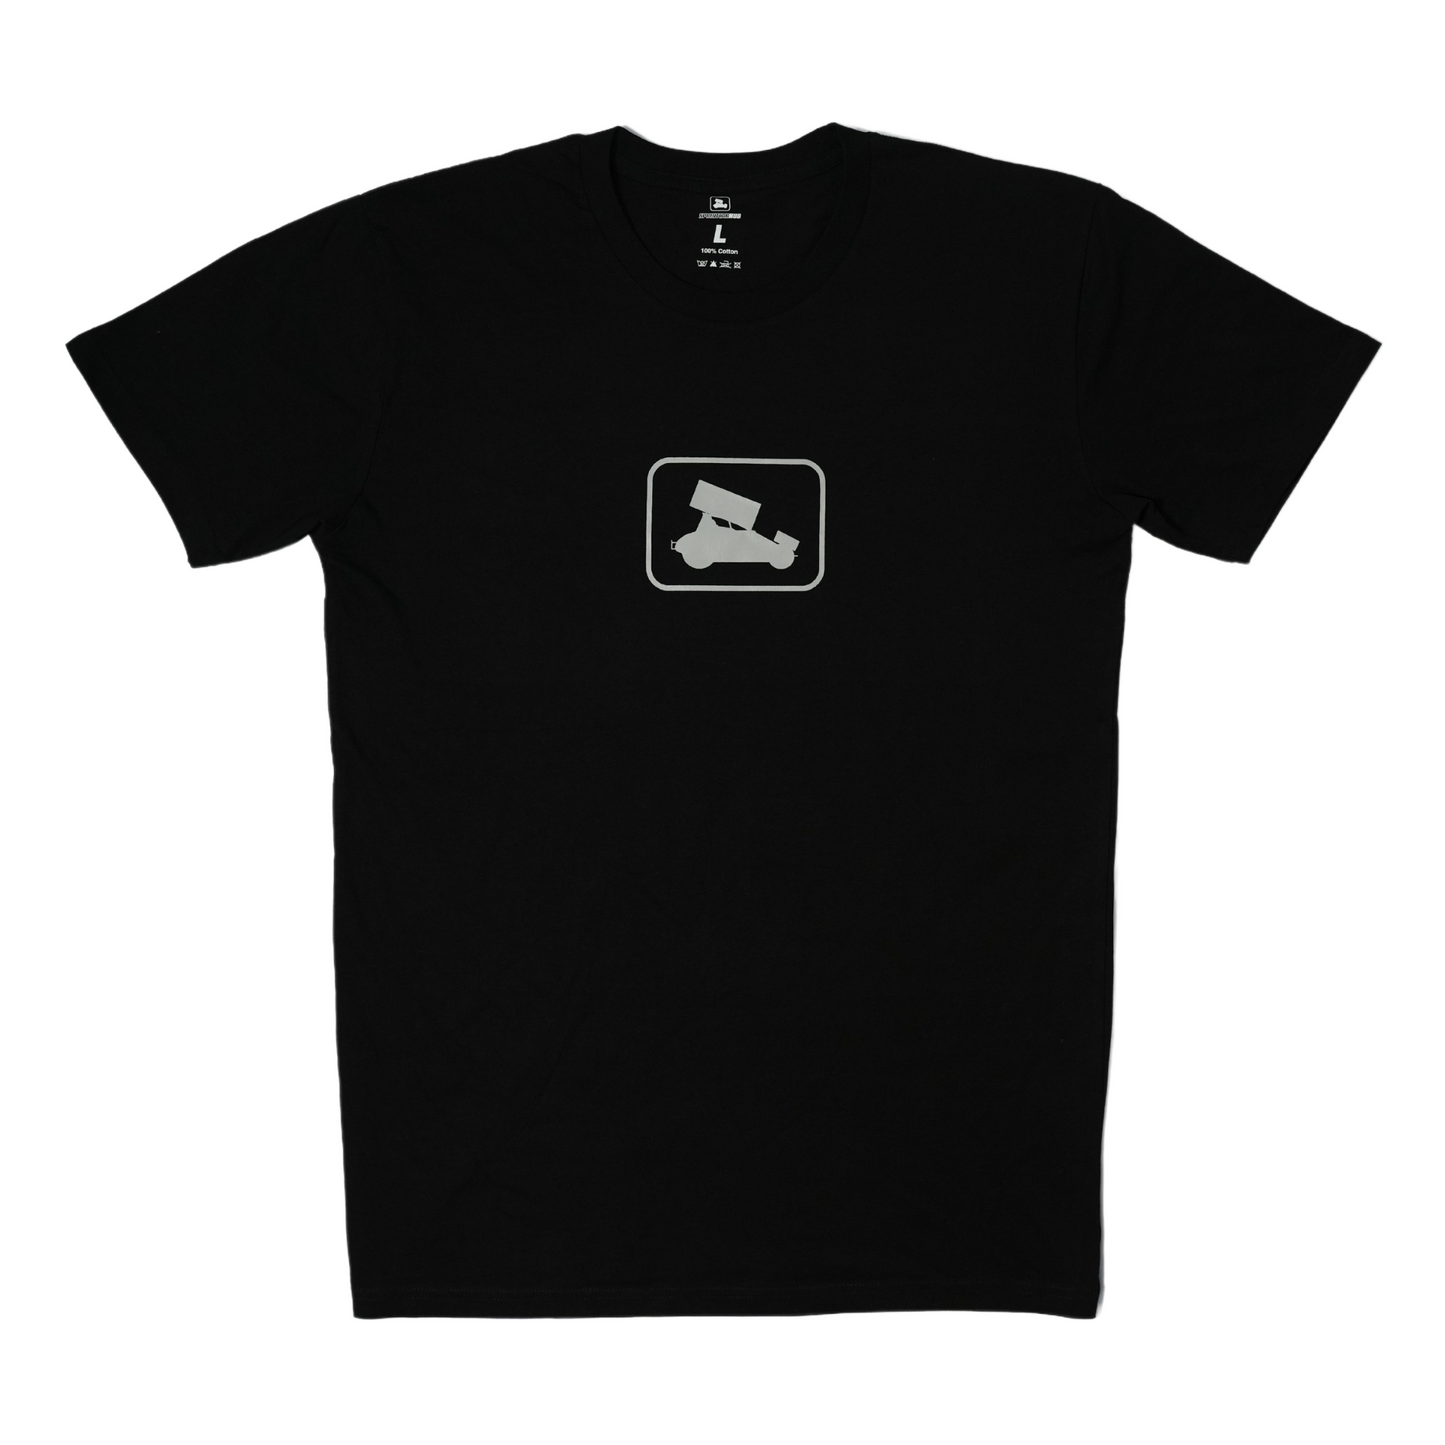 EMBLEM T-shirt - BLACK